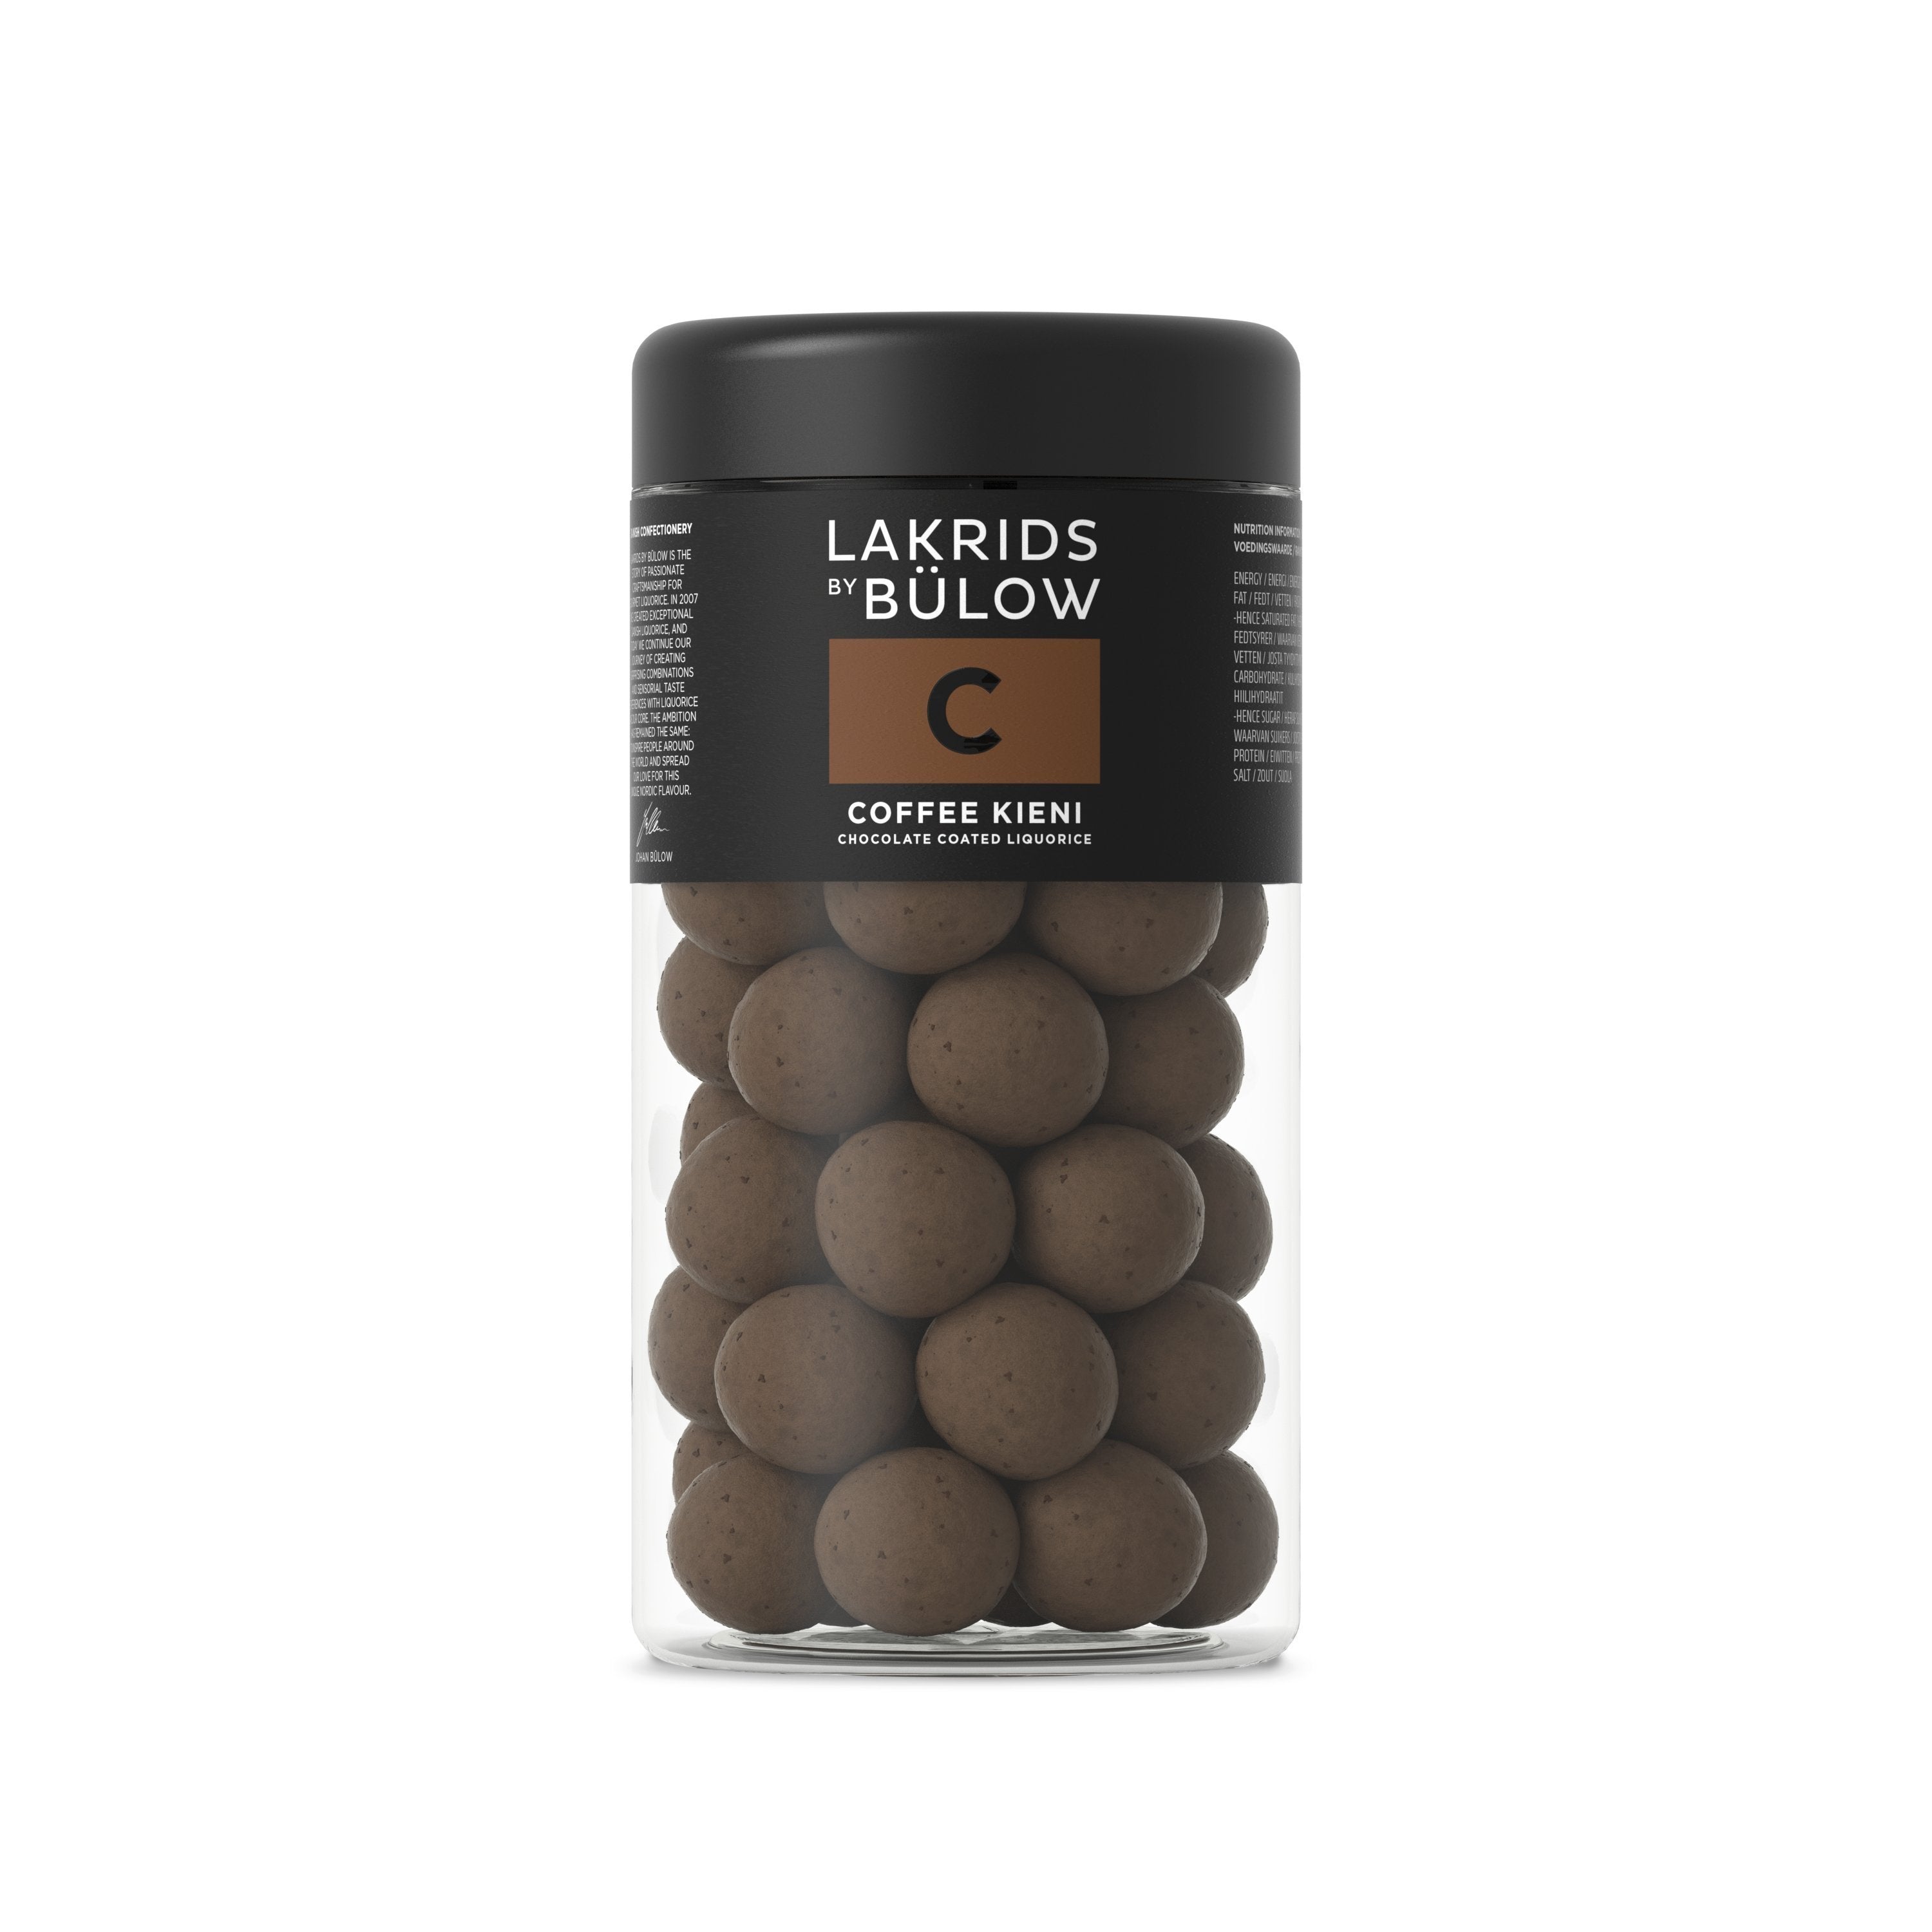 Lakrids By Bülow C Coffee Kieni, 295 Grams